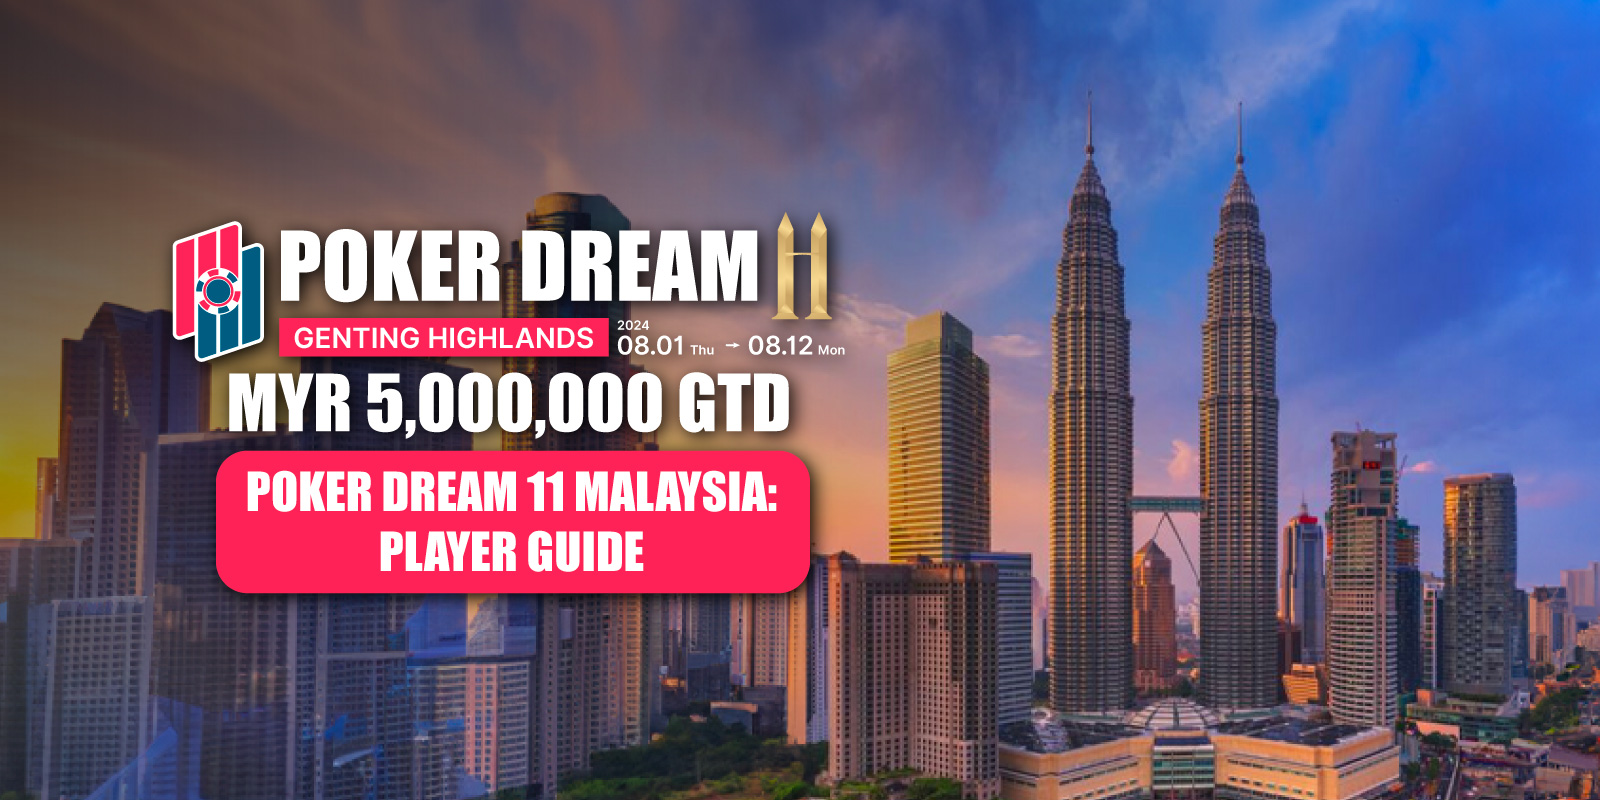 Poker Dream 11 Malaysia: Player Guide